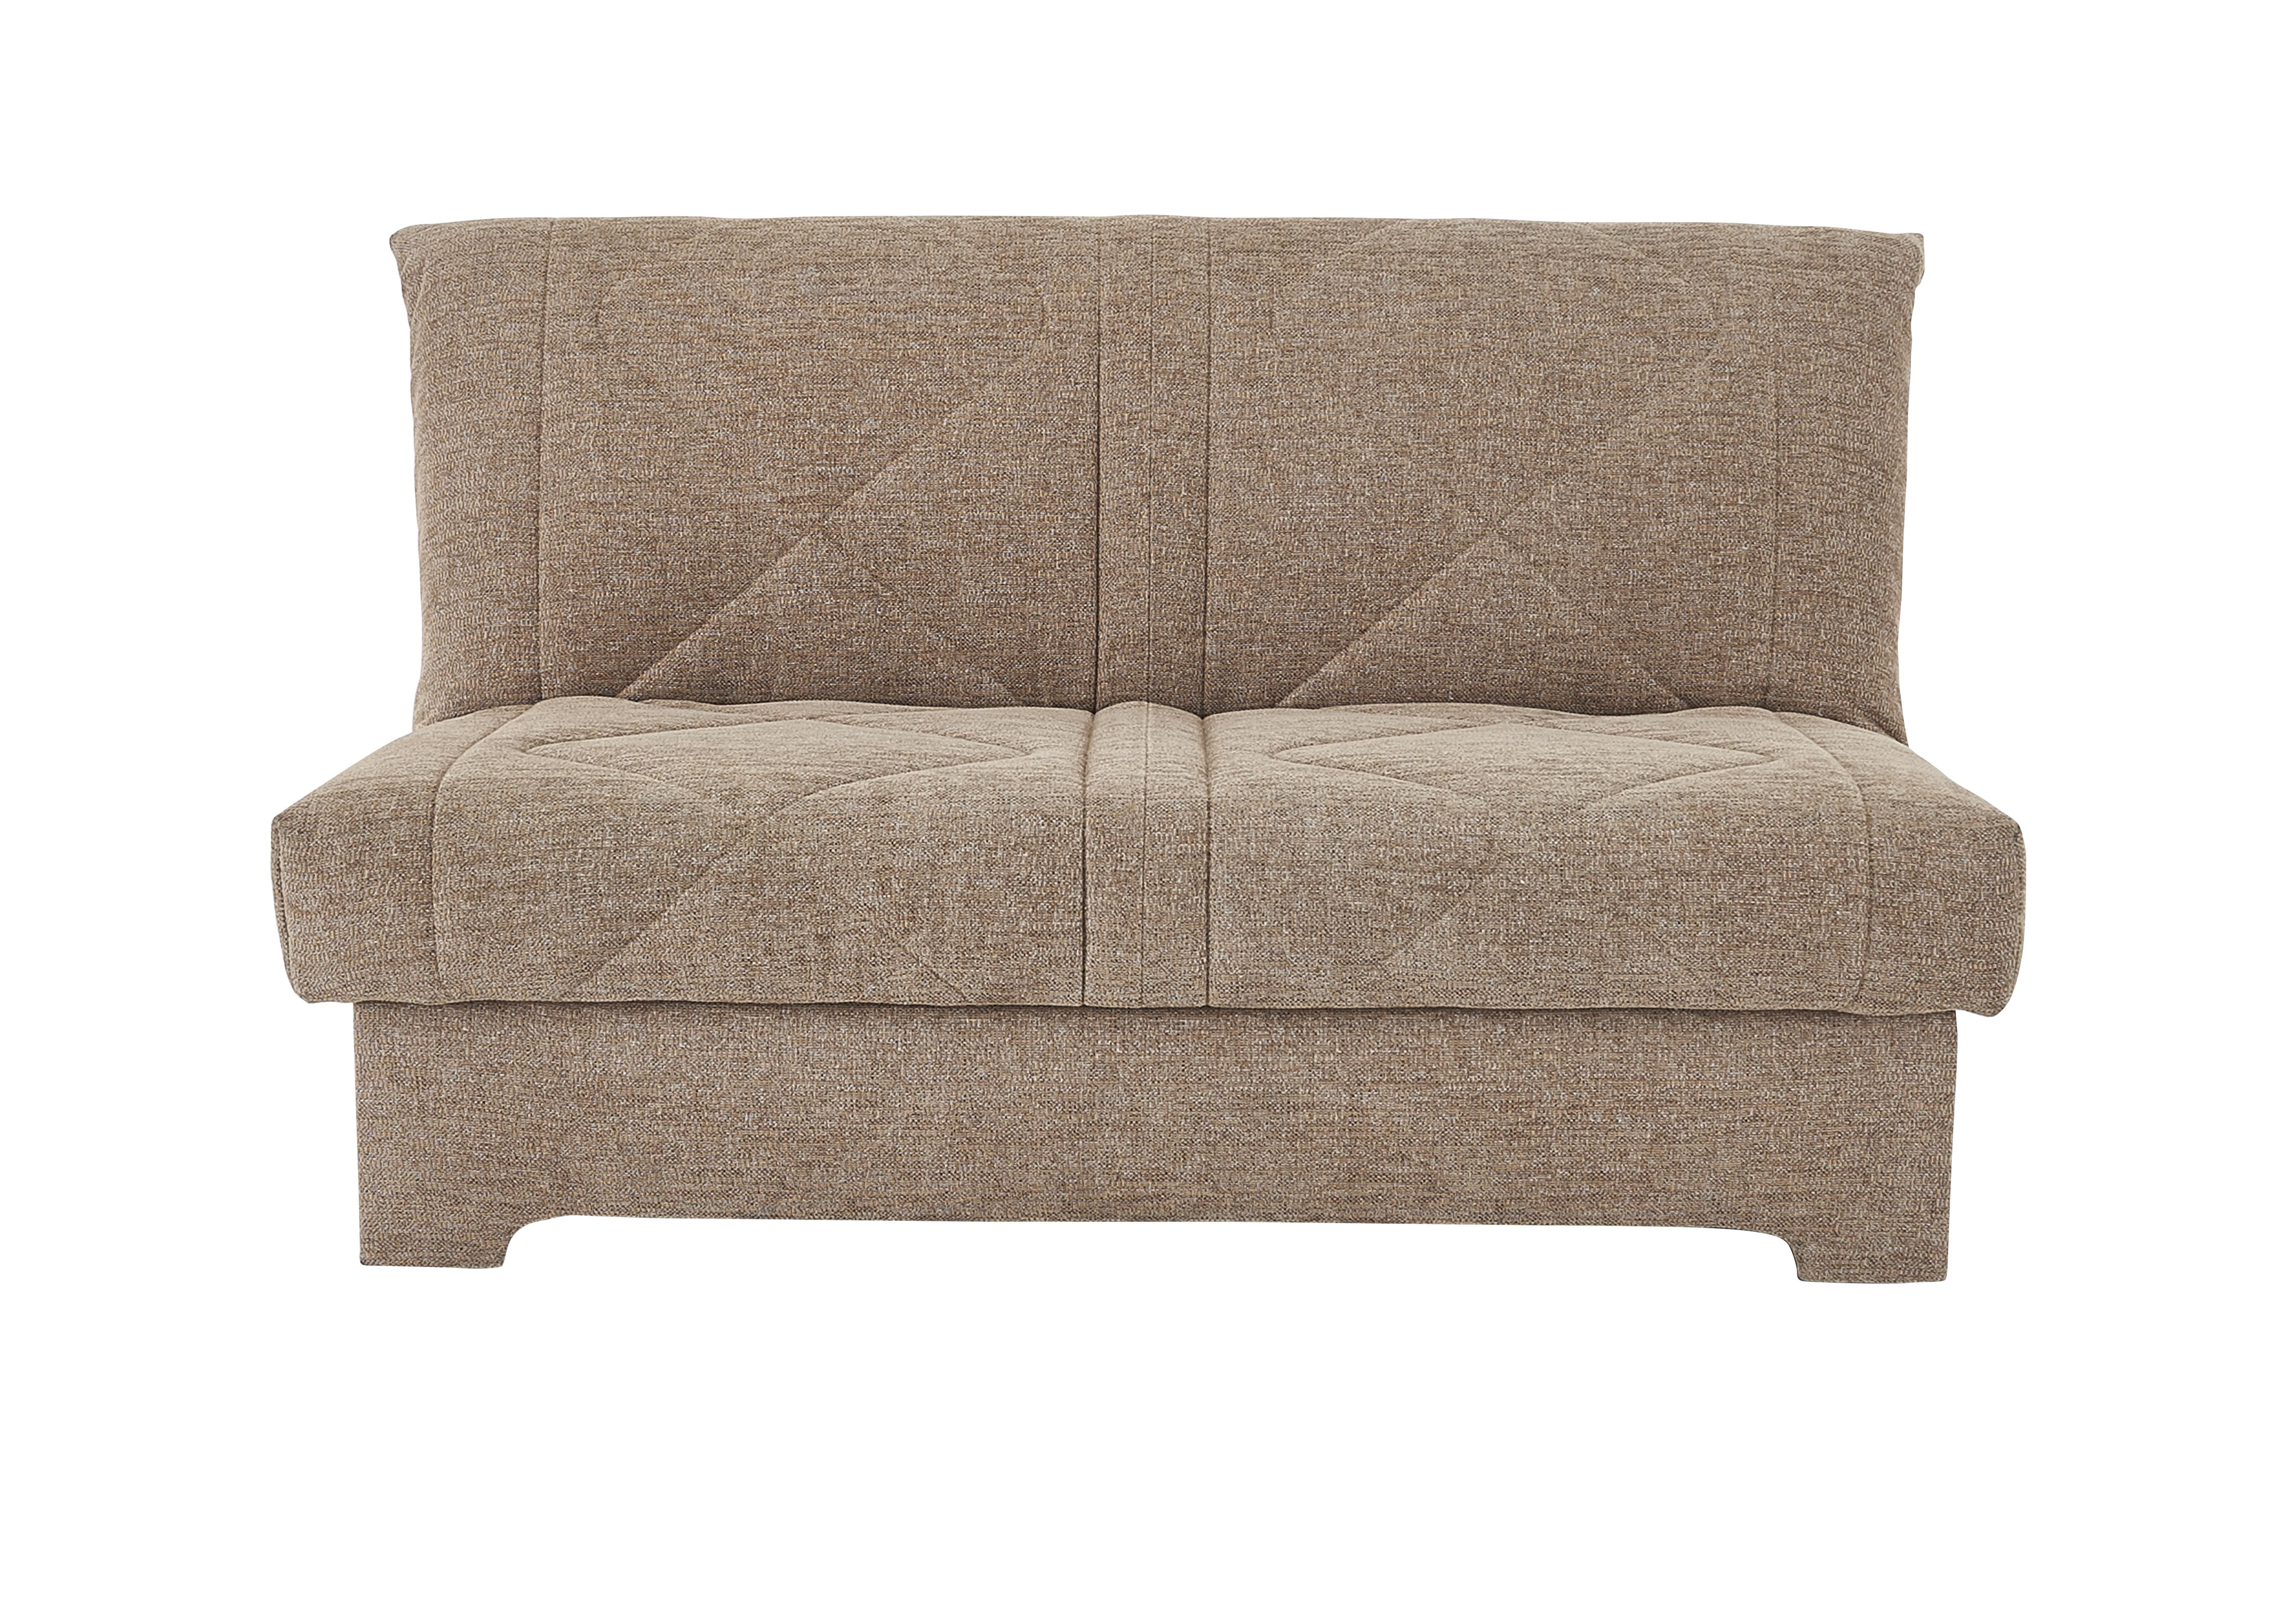 aztec 2 seater fabric sofa bed